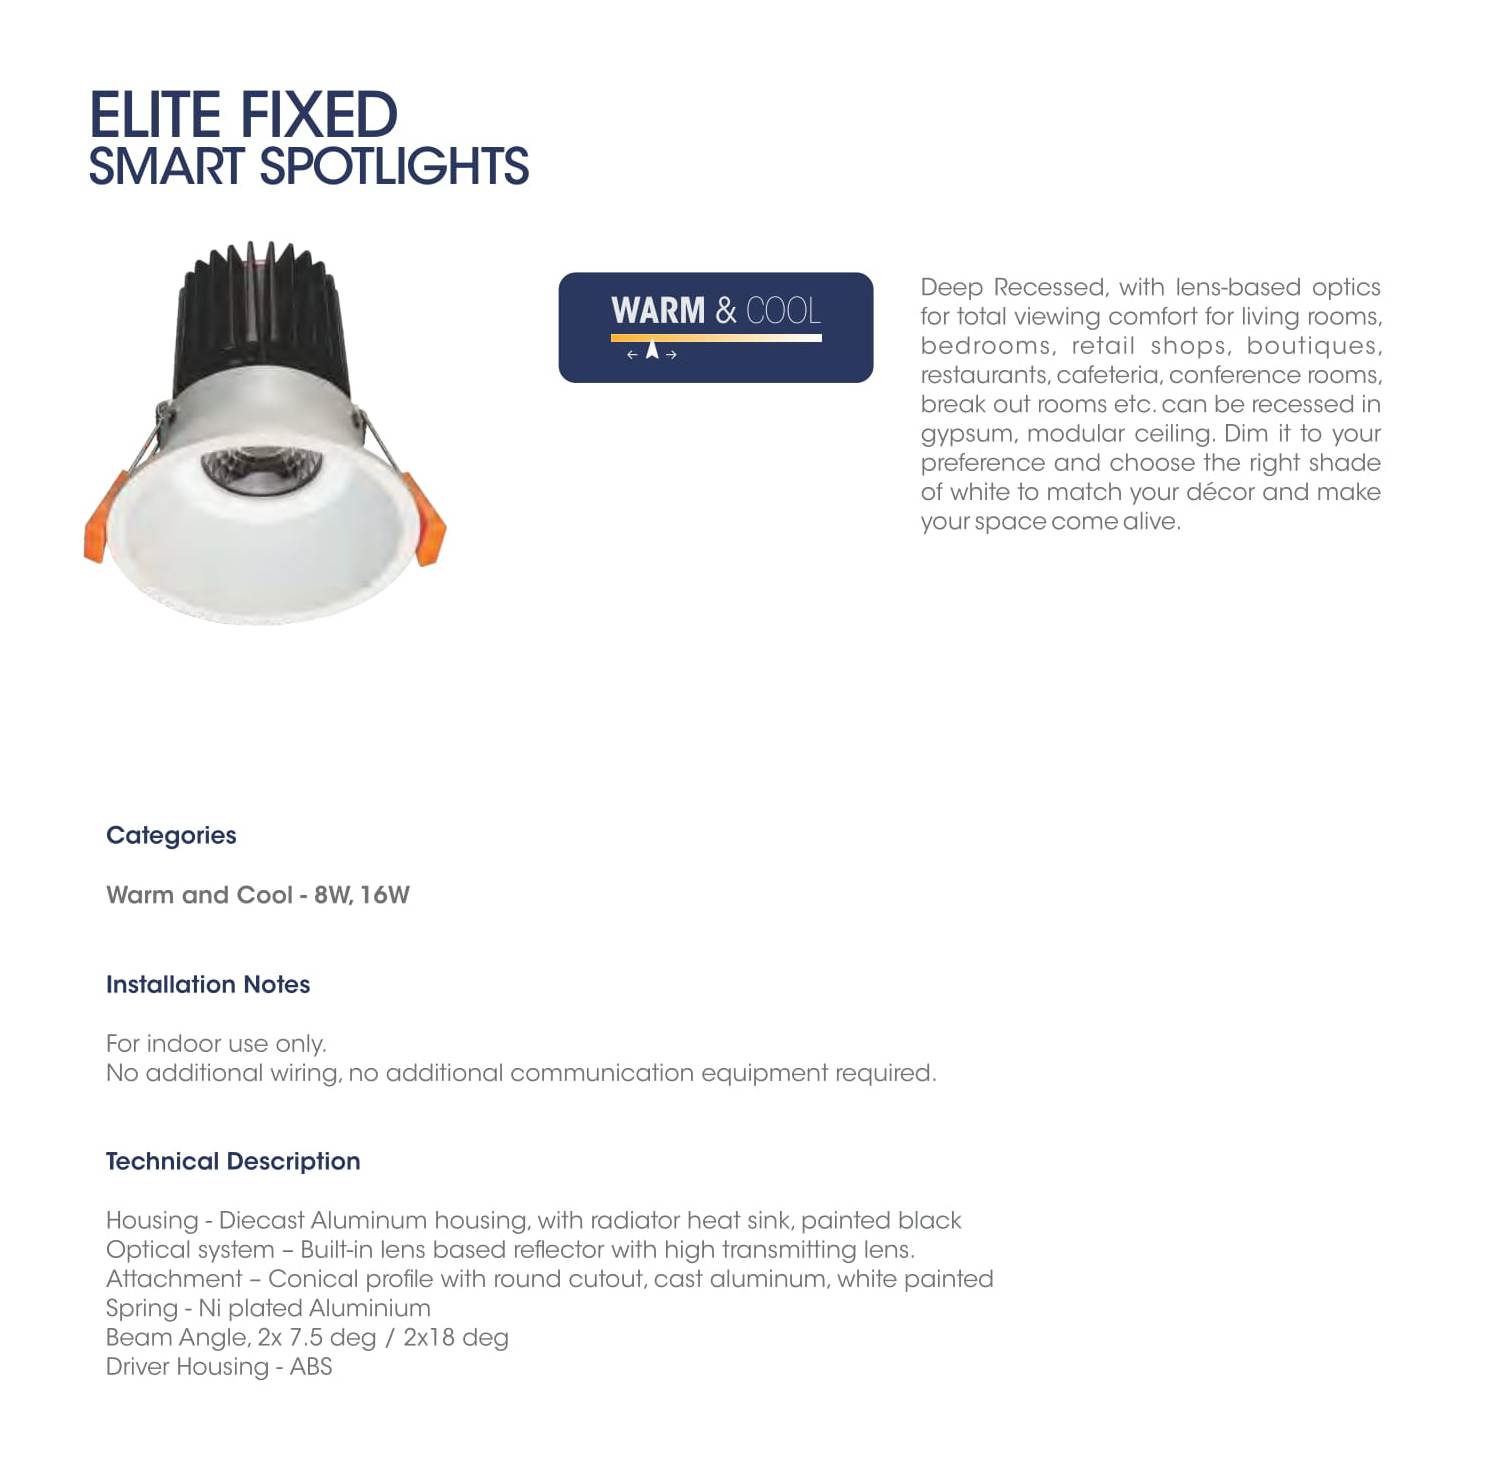 Elite Fixed Smart Spotlights